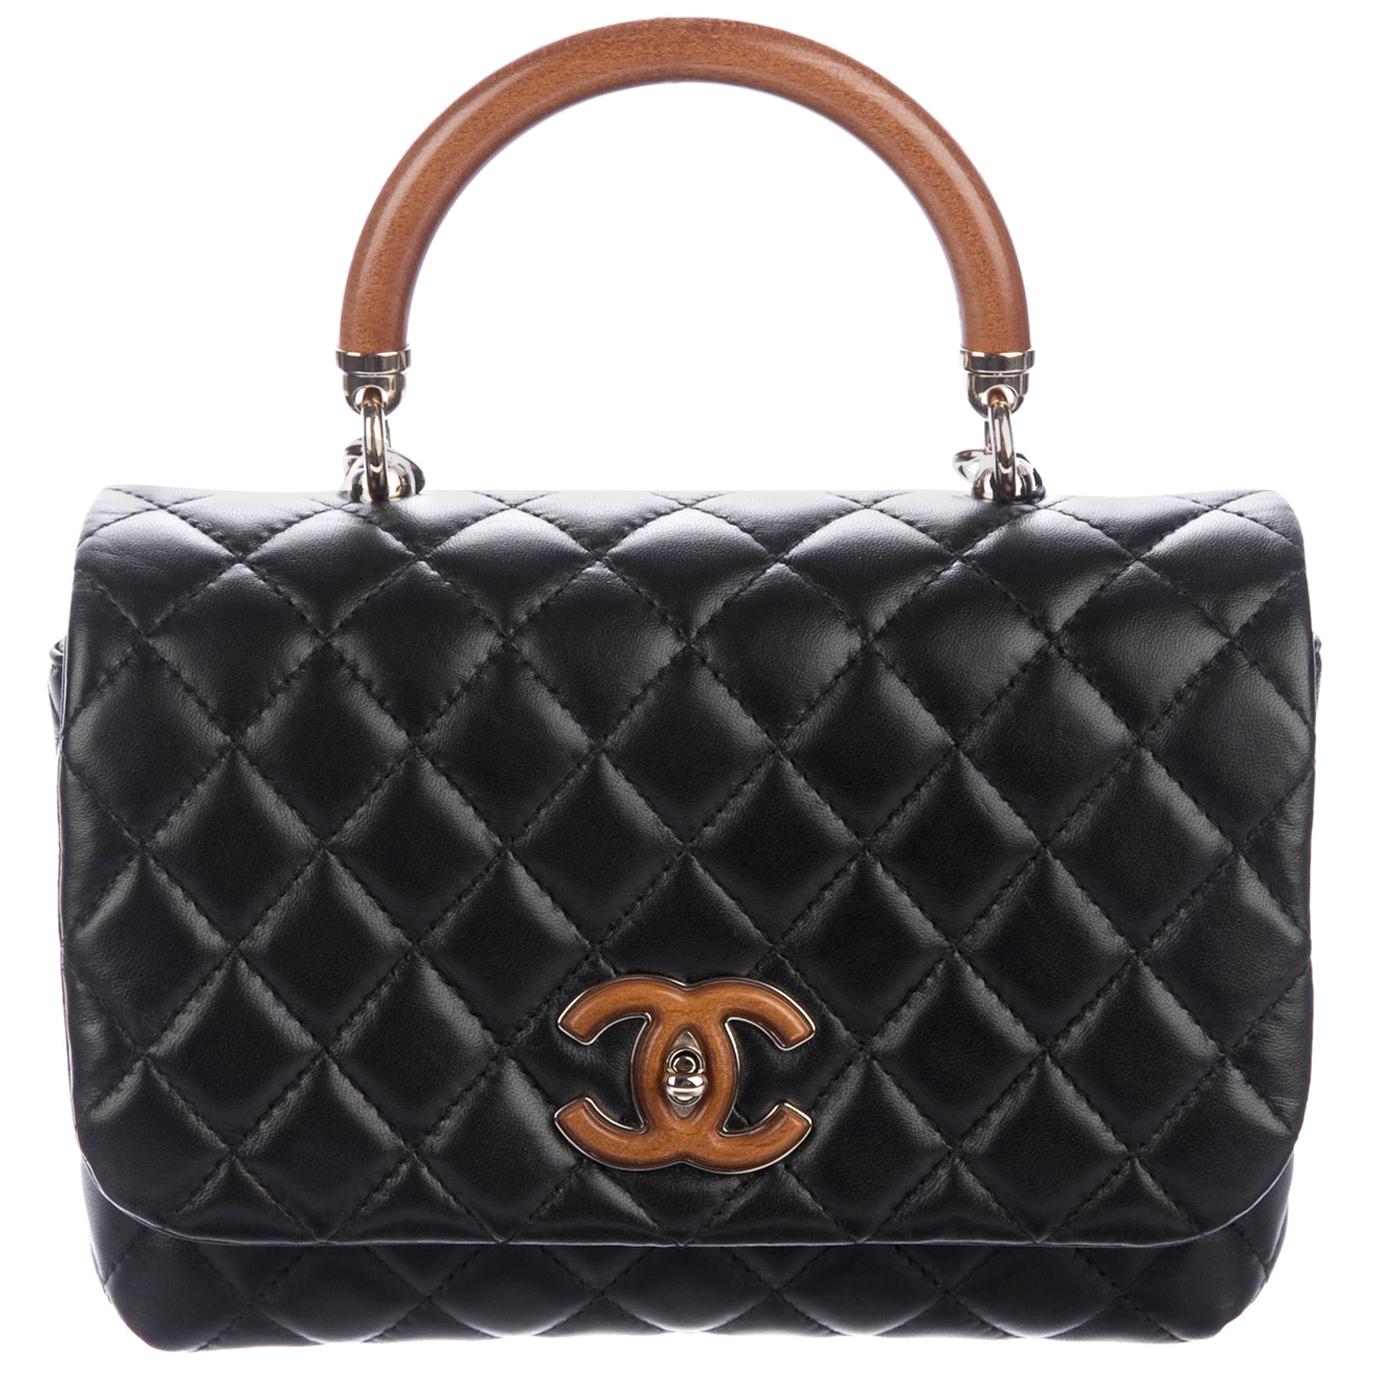 Chanel NEW Black Leather Wood Top Handle Satchel Kelly Shoulder Flap Bag in Box 